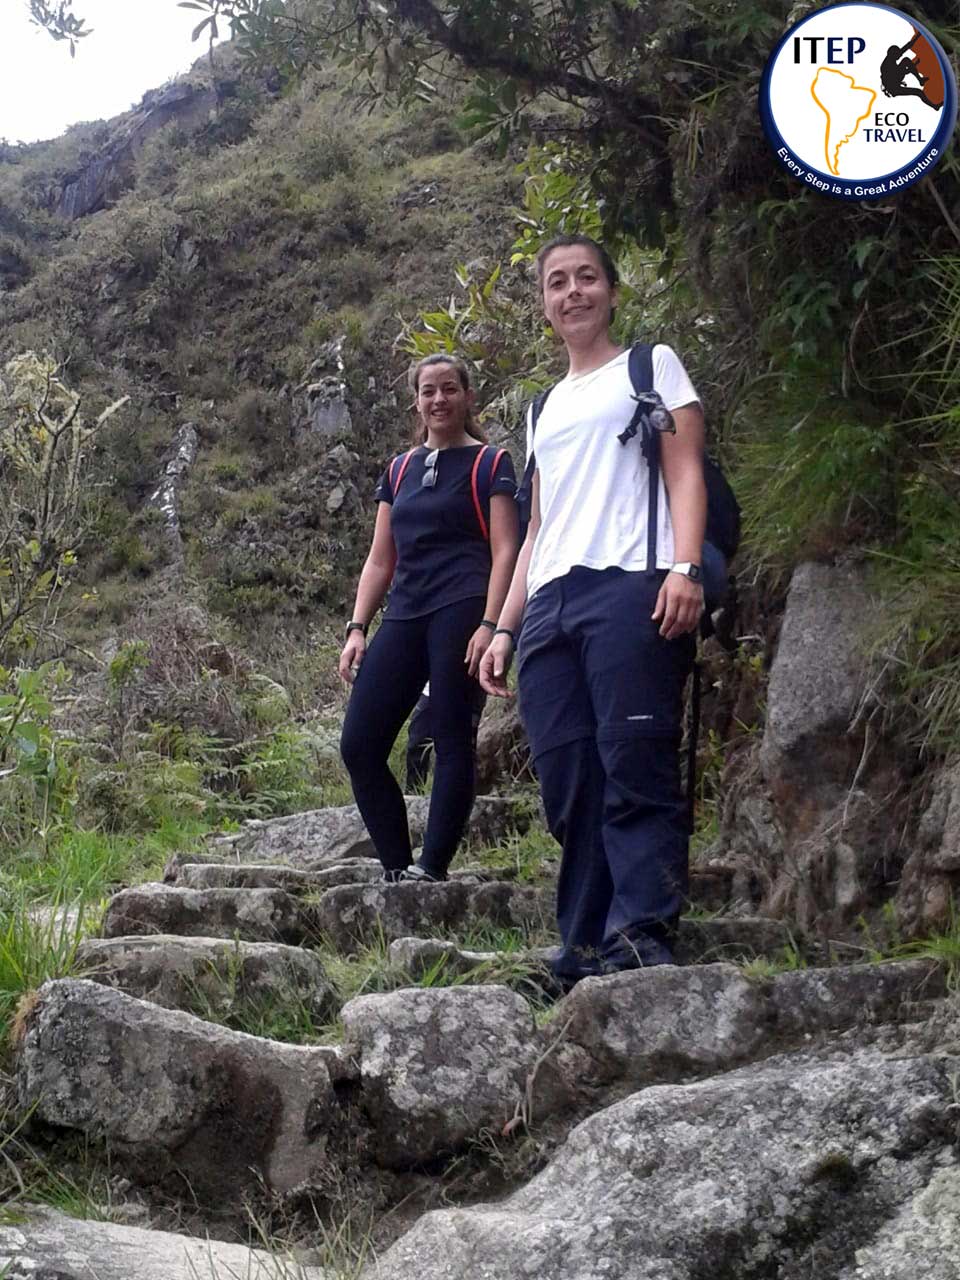 Inca Trail in 2 days by Carmen Elvira - Inca Trail in 2 days by Carmen Elvira